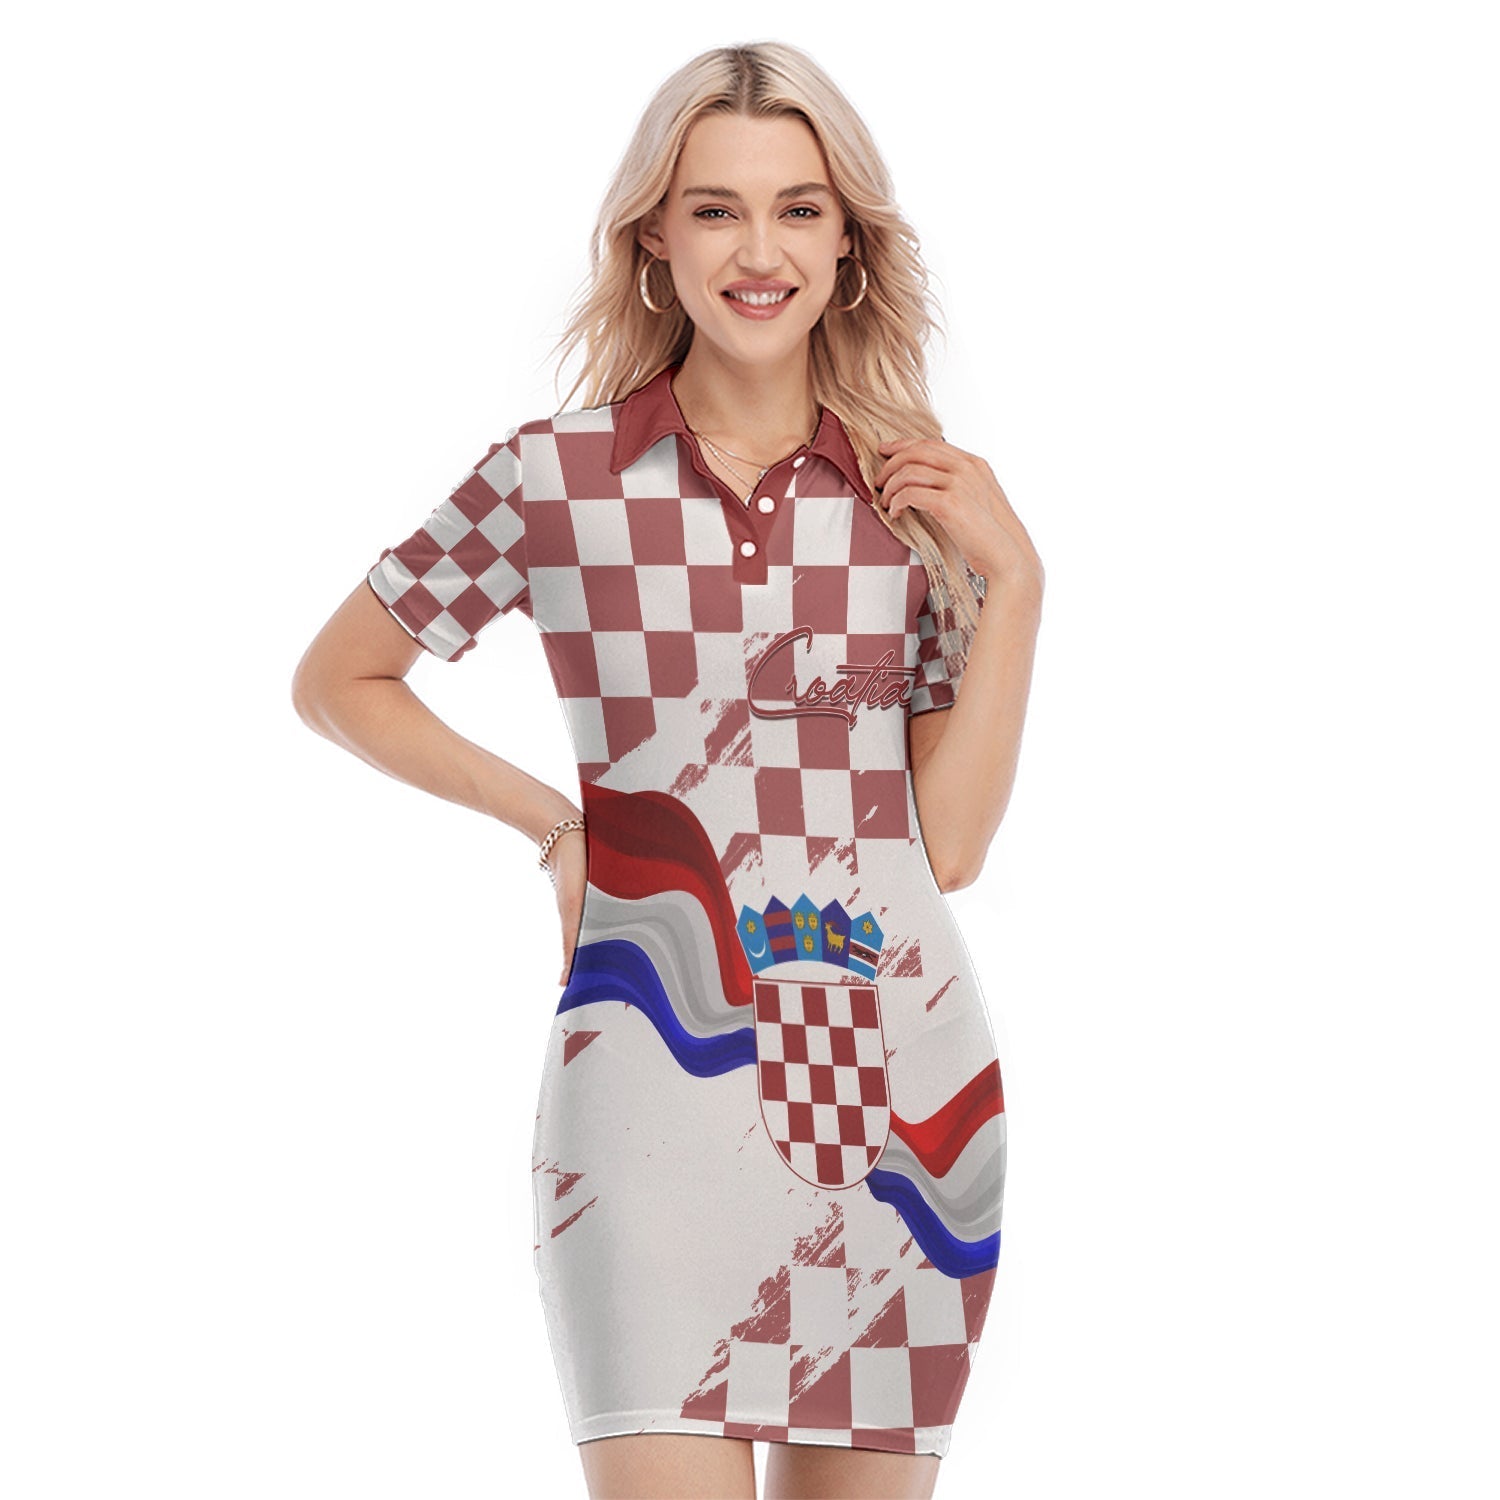 croatia-polo-dress-checkerboard-grunge-style